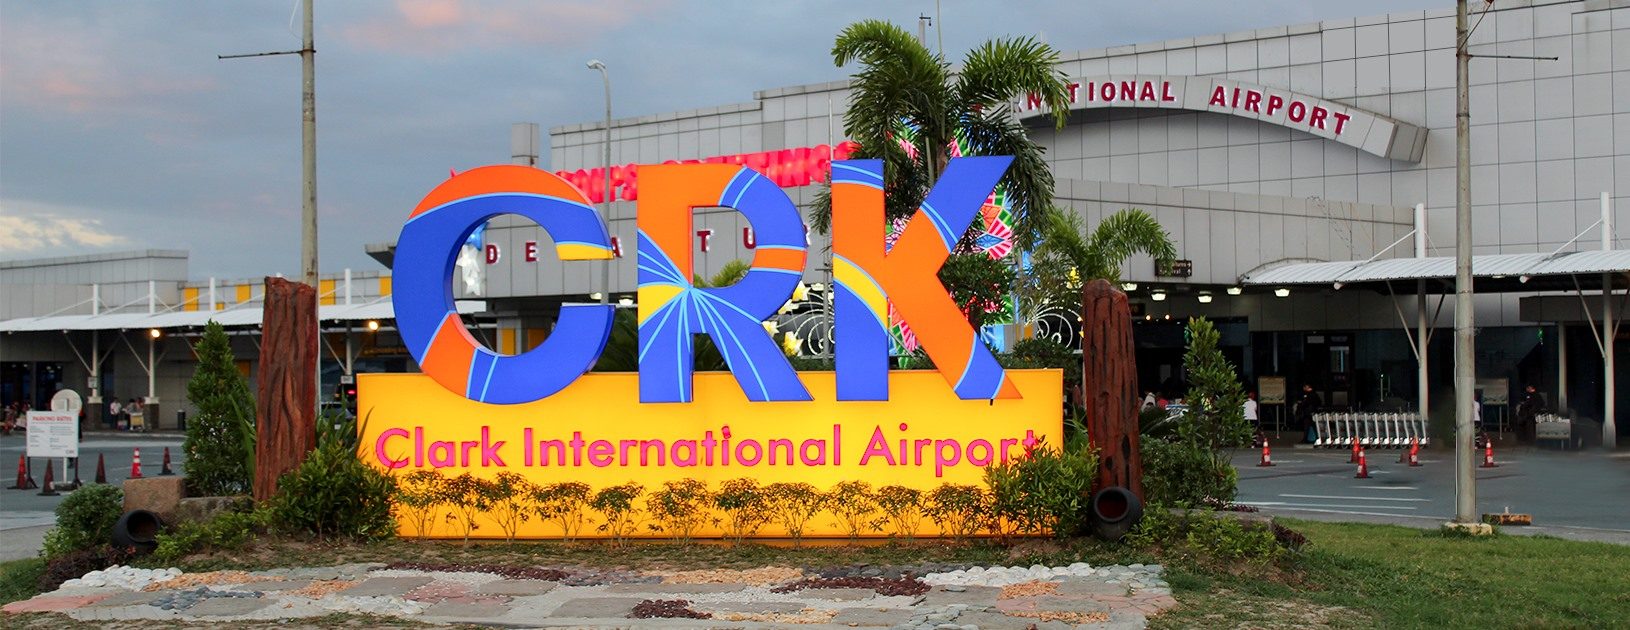 Clark International Airport to suspend commercial flights effective April 3